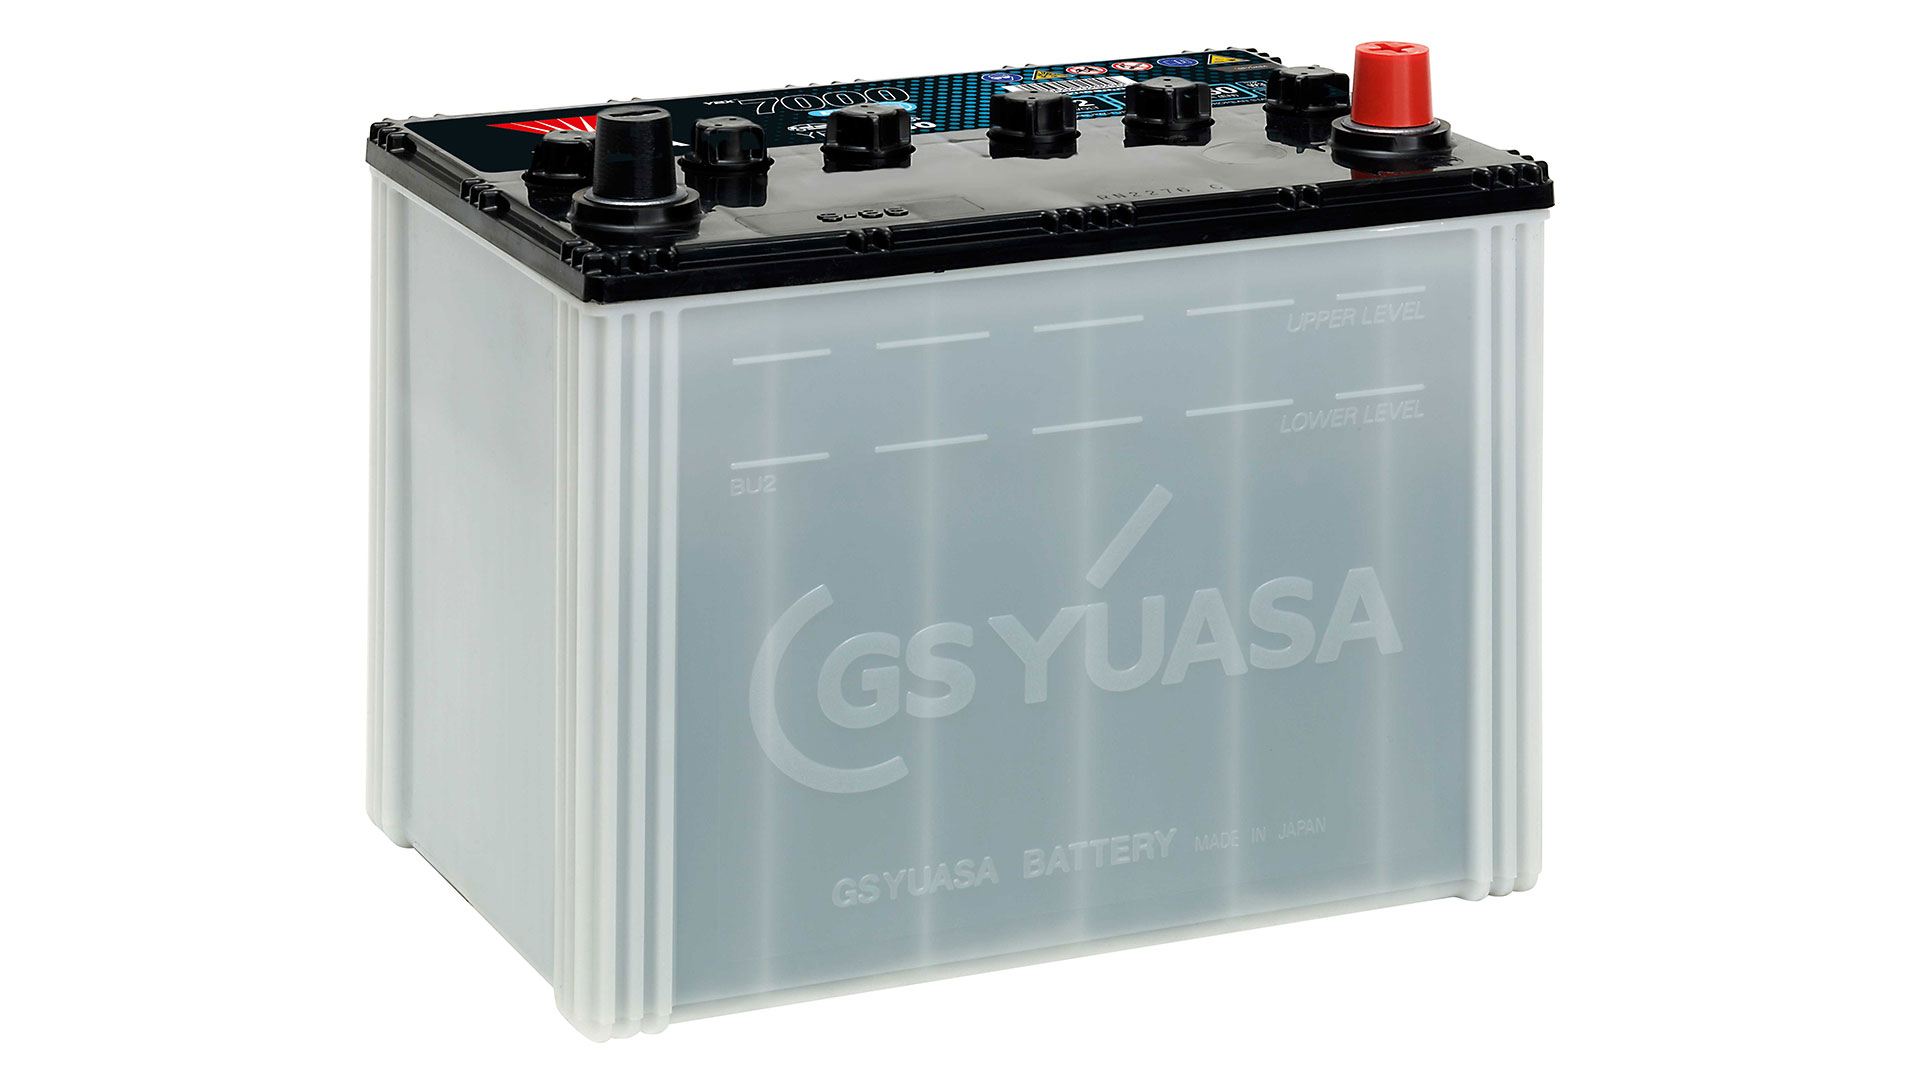 YBX7030 (S85/S95) 12V 80Ah 760A Yuasa EFB Start Stop Batterie